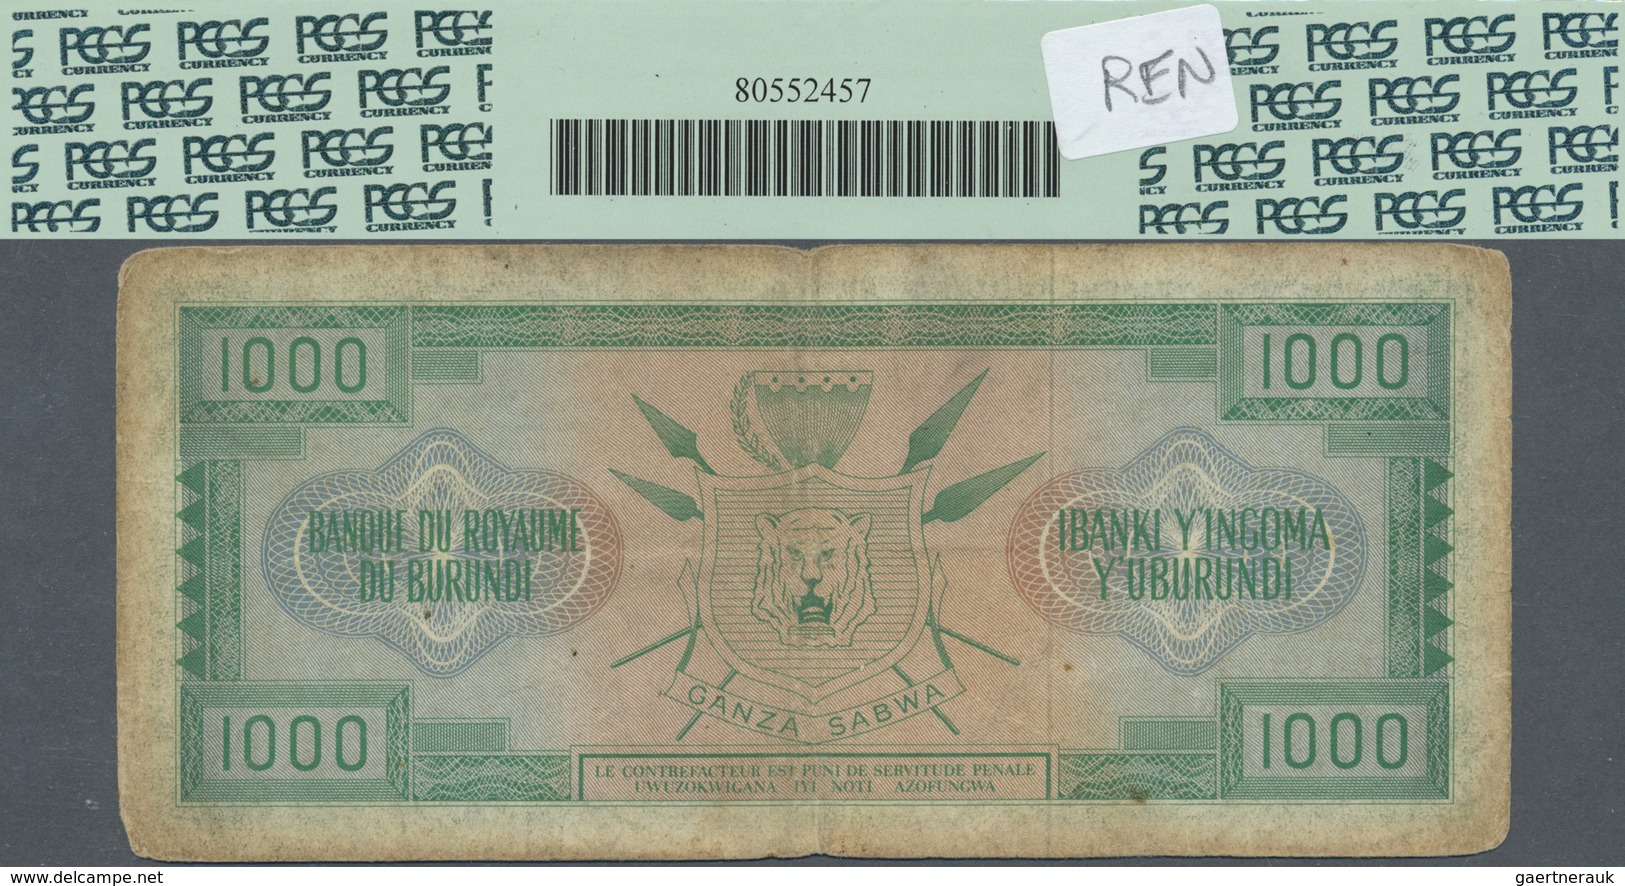 Burundi: 1000 Francs 1965 P. 14, PCGS Graded FINE 12. - Burundi